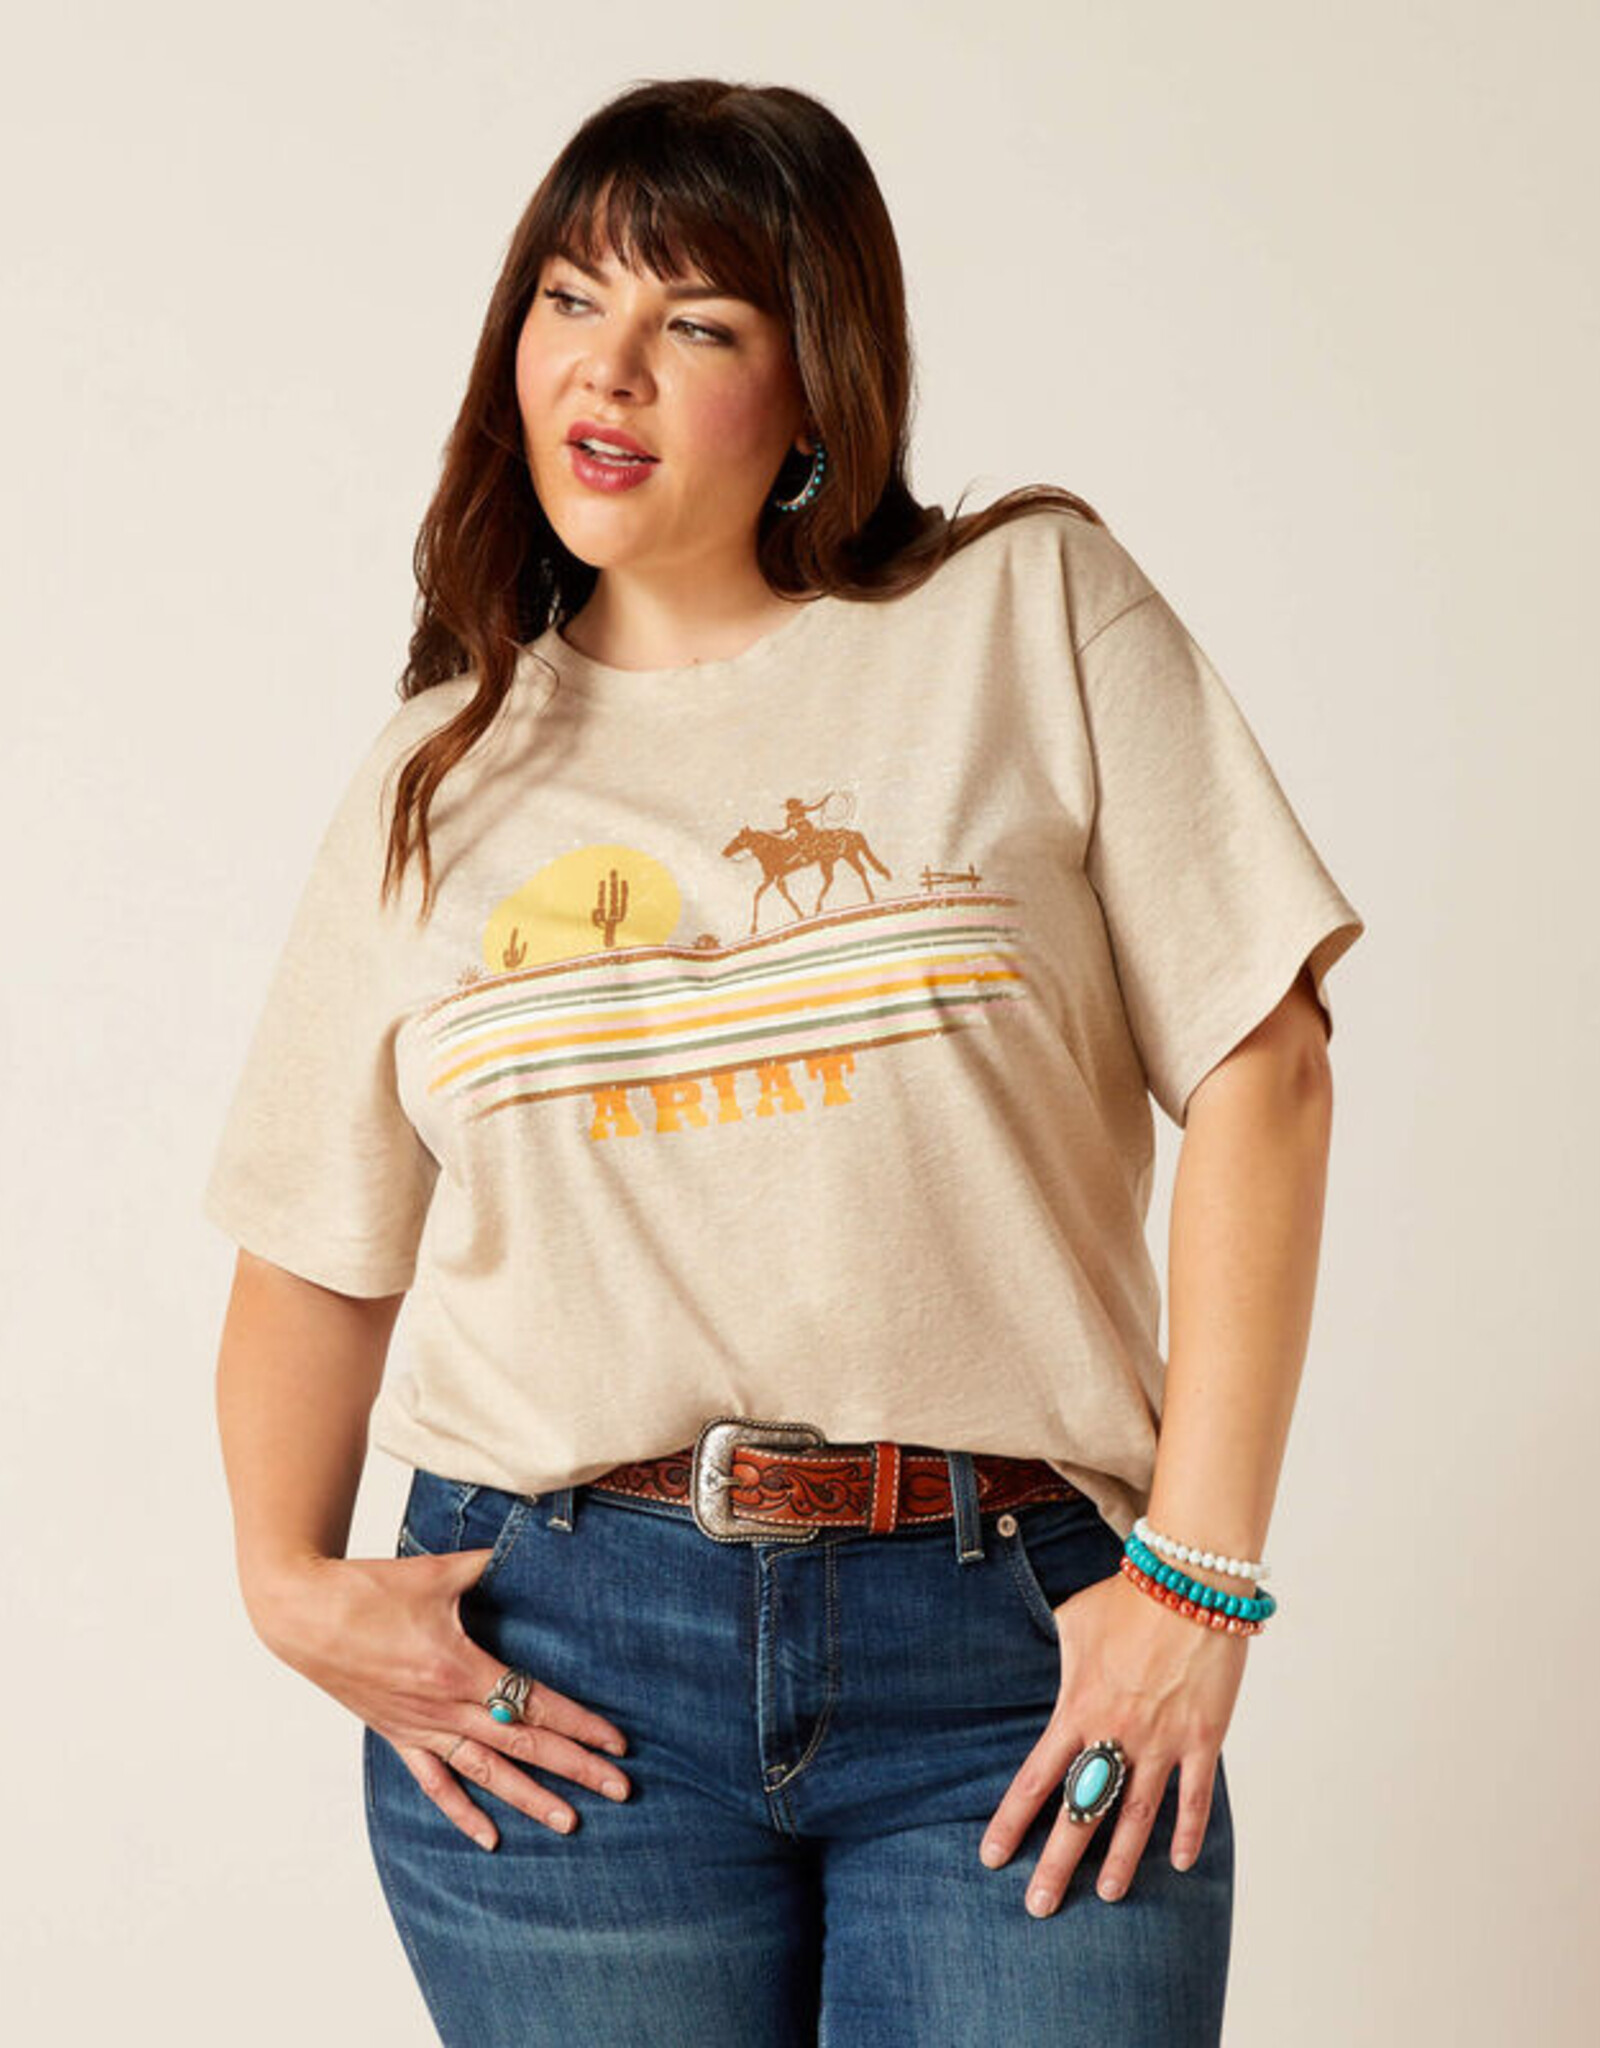 Ariat Ladies' Cowgirl Desert Tee Shirt